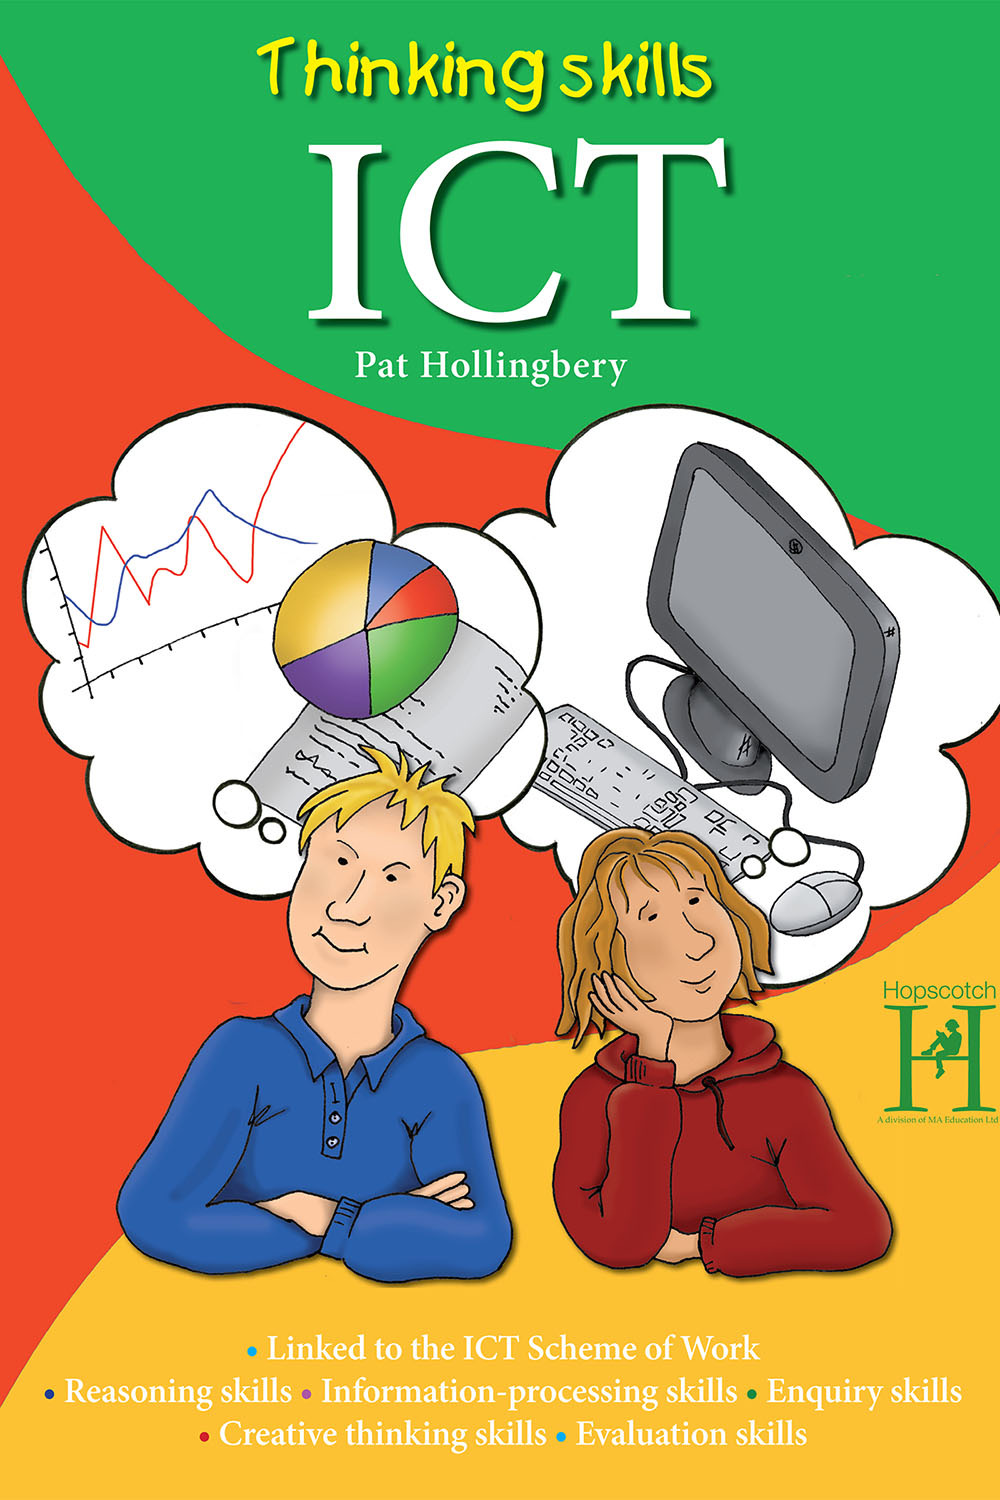 Hollingbery, Pat - Thinking Skills - ICT, ebook